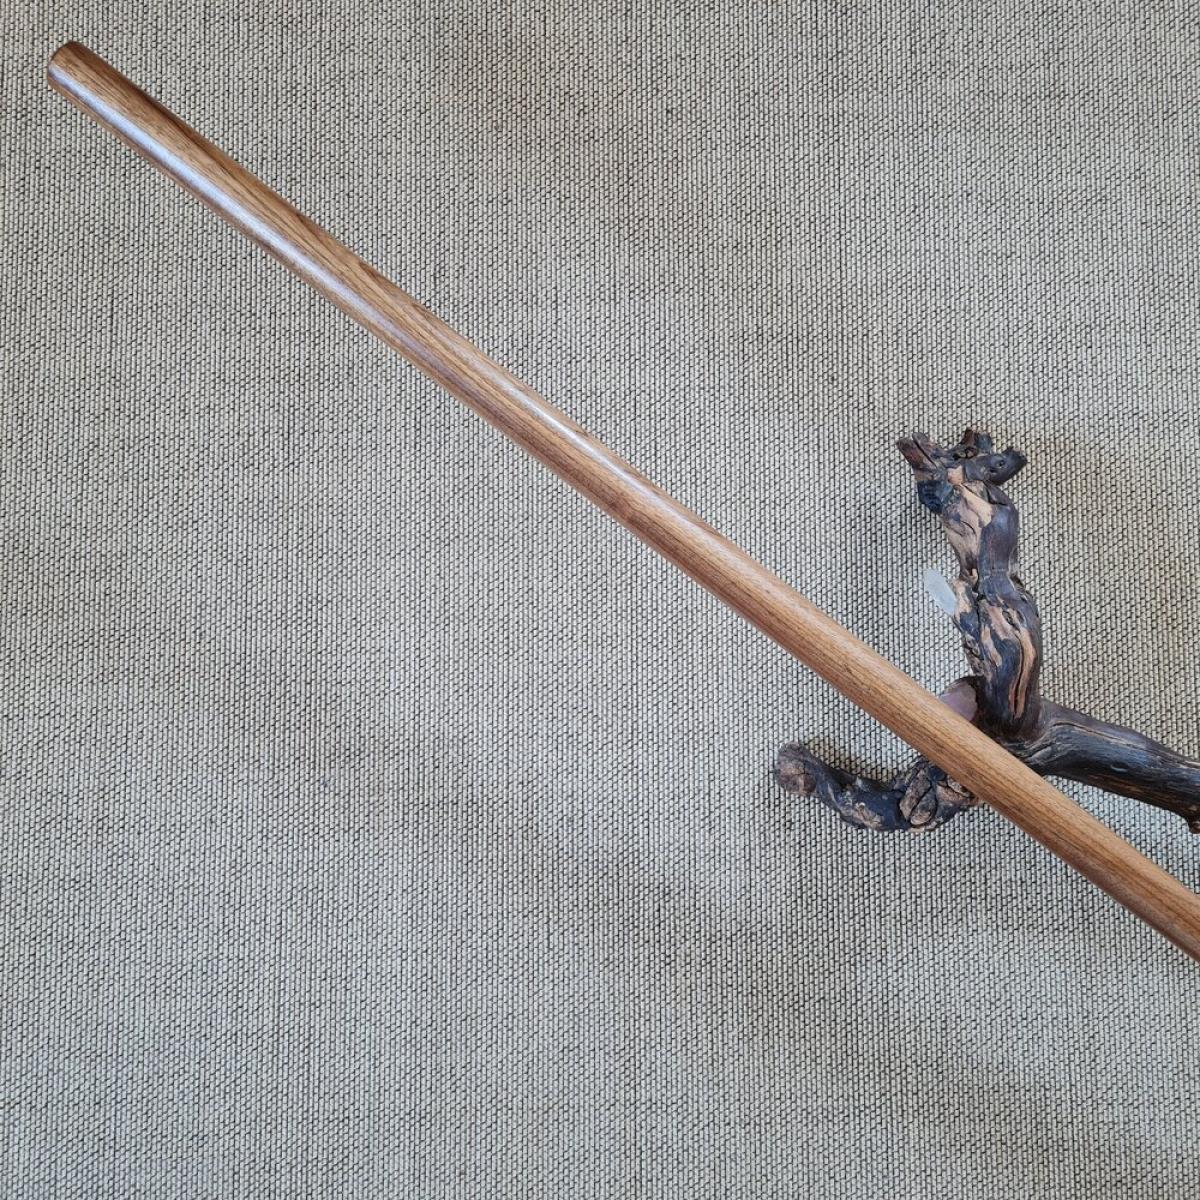 Bo-Stick made of Supa wood - length 182 cm buy online ➤ www.bokken-shop.de. Suitable for Aikido, Kobudō, Bujinkan, Koryu, Jodo✓ Your Budo dealer!